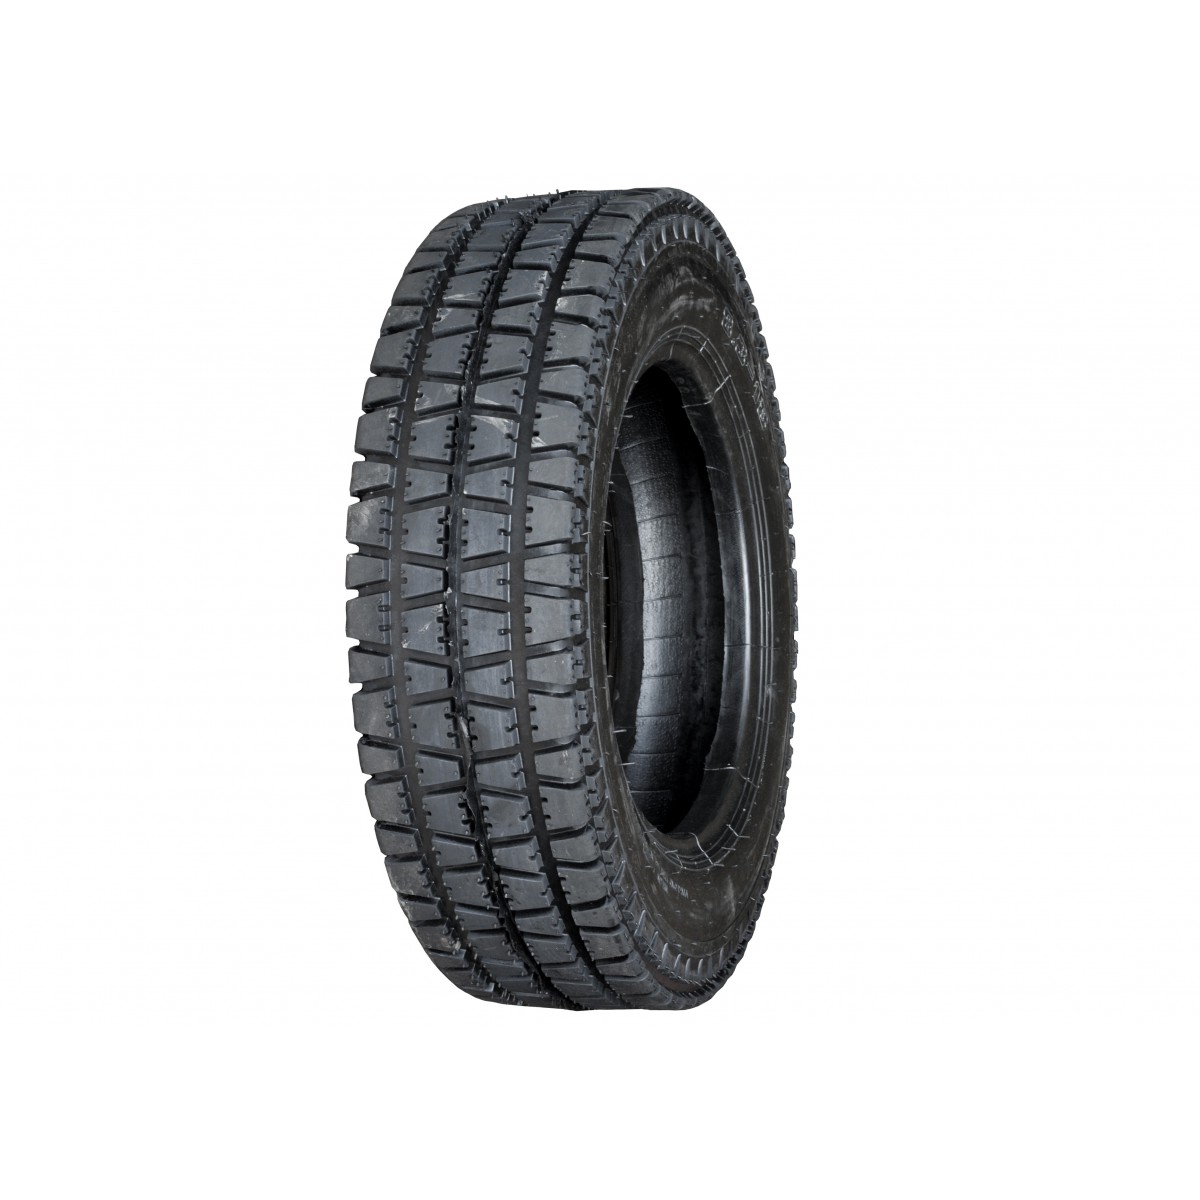 Neumático 8.3x18 12PR 8.3-18, 18x8.3 hierba